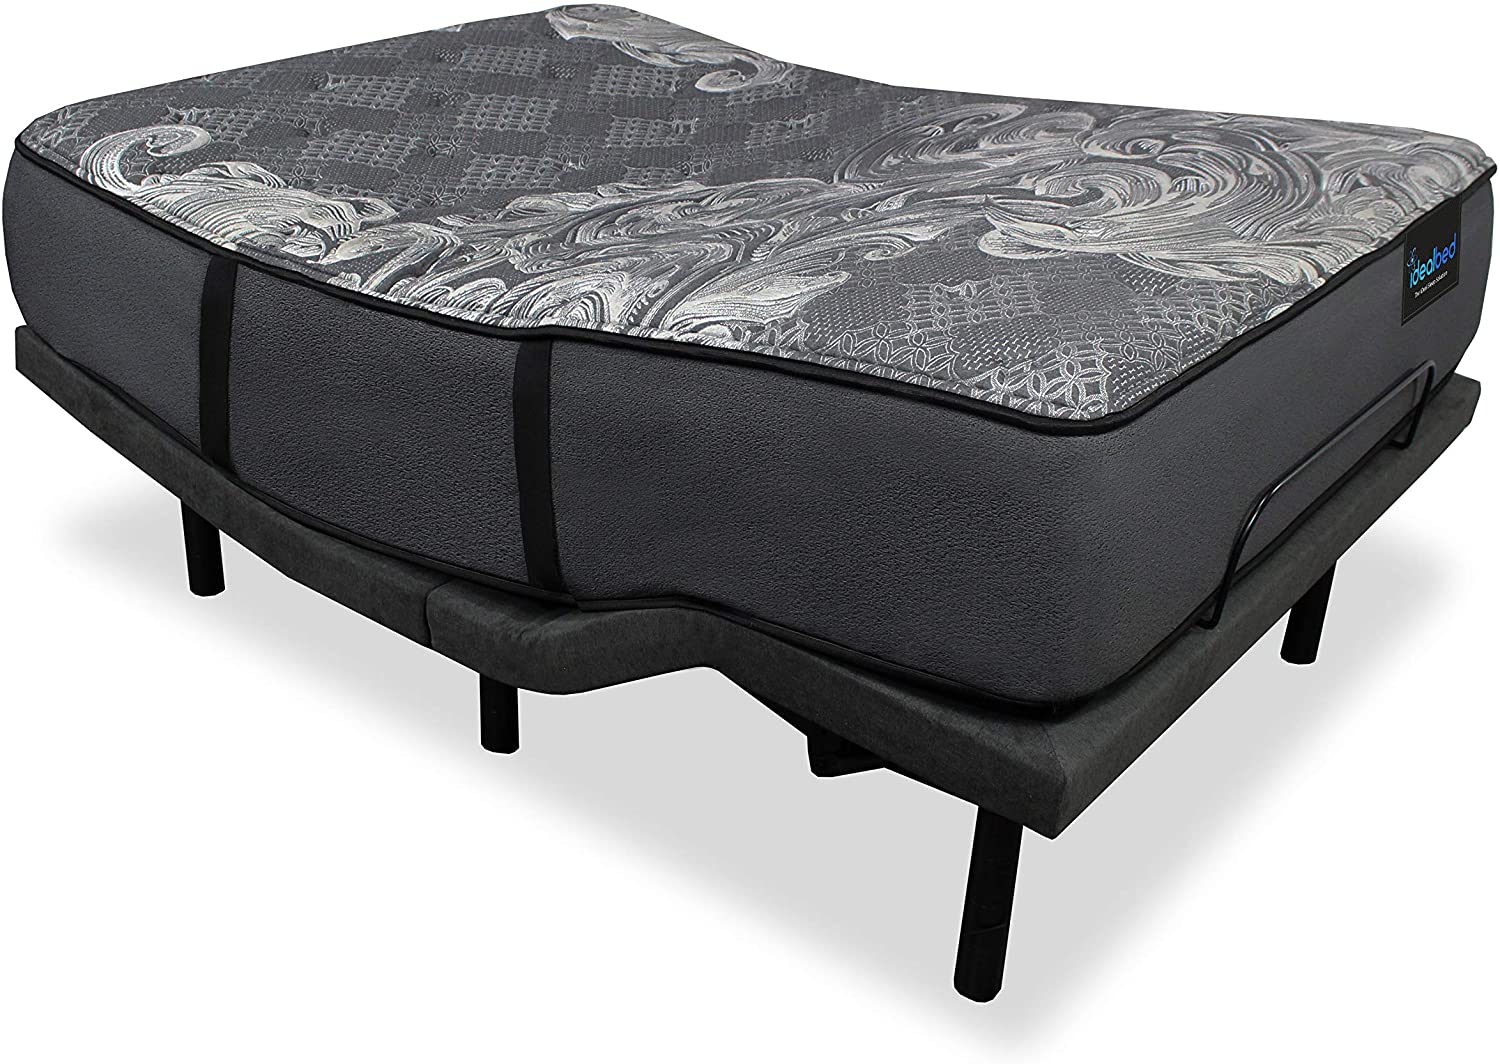 idealbed i4 emerald luxury hybrid firm mattress